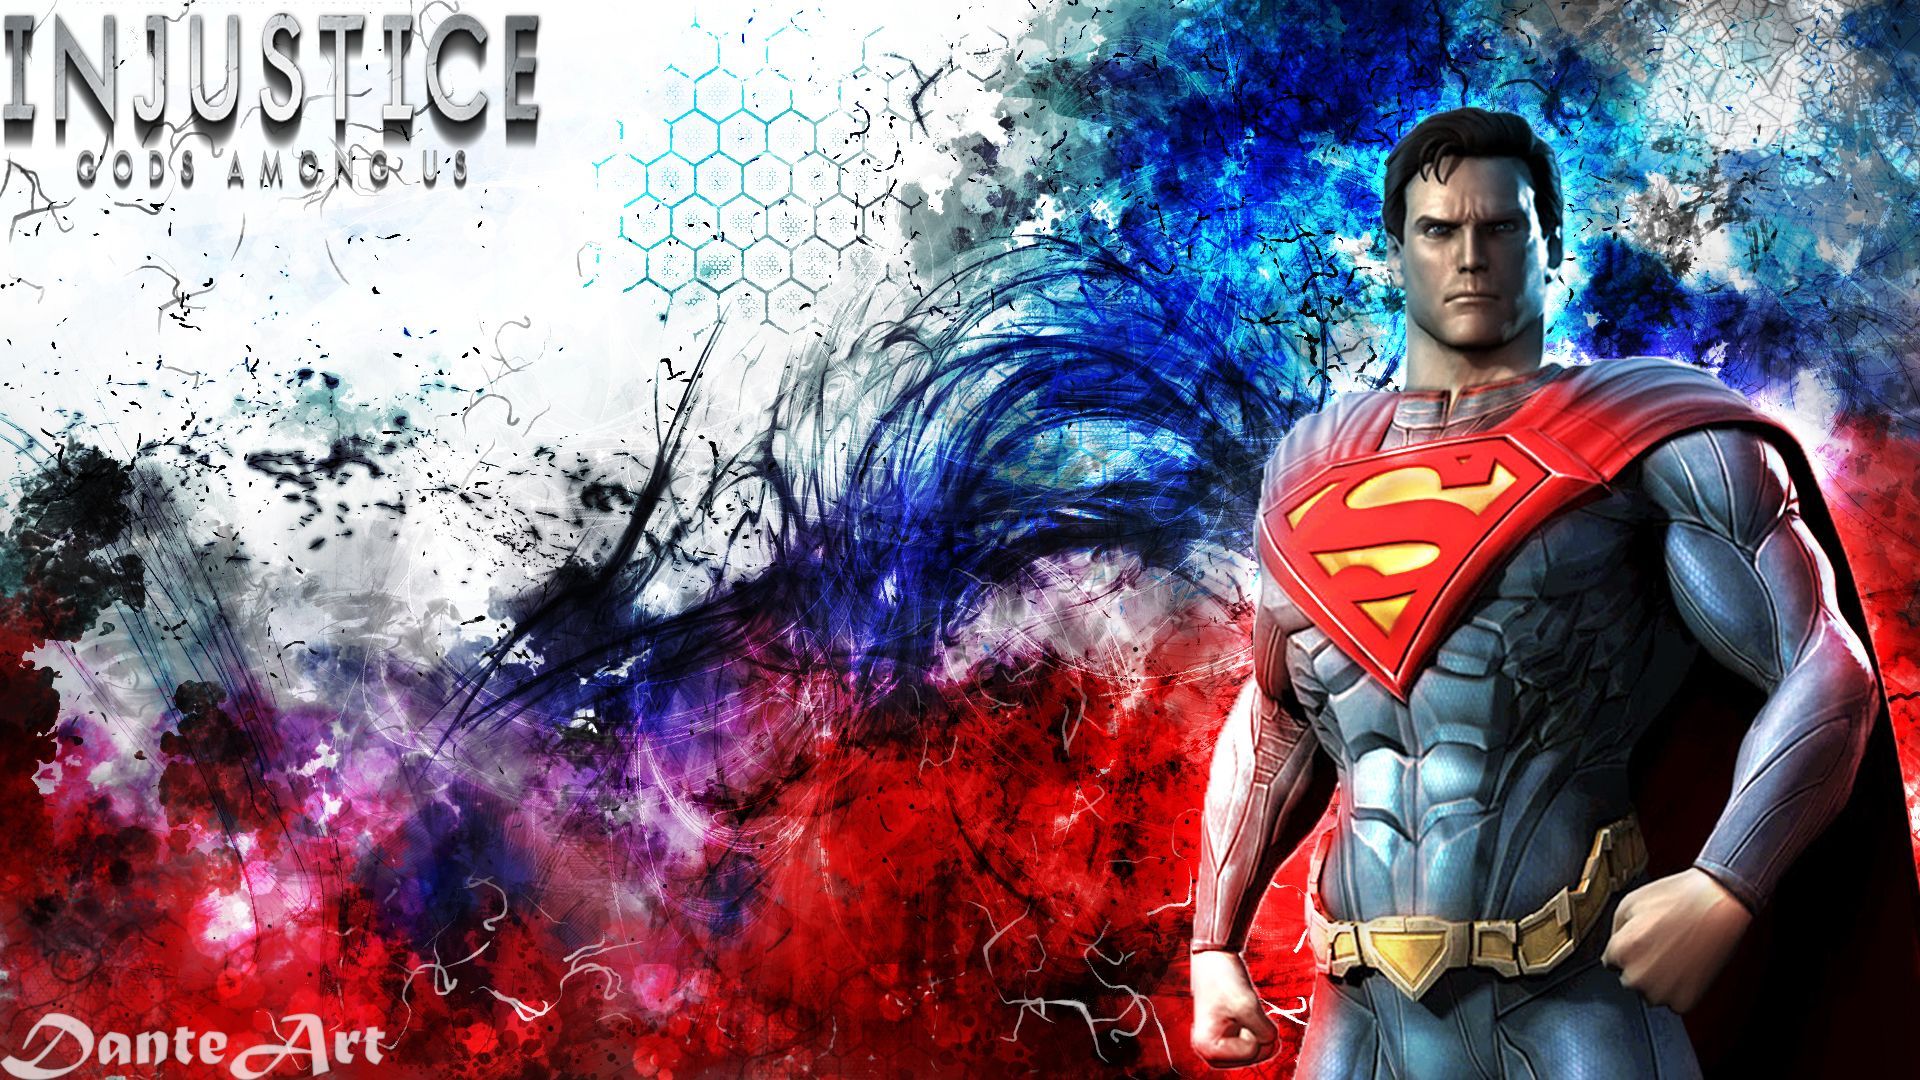 Injustice: Gods Among Us Edition: superman. Superman wallpaper, Superman artwork, Superman games